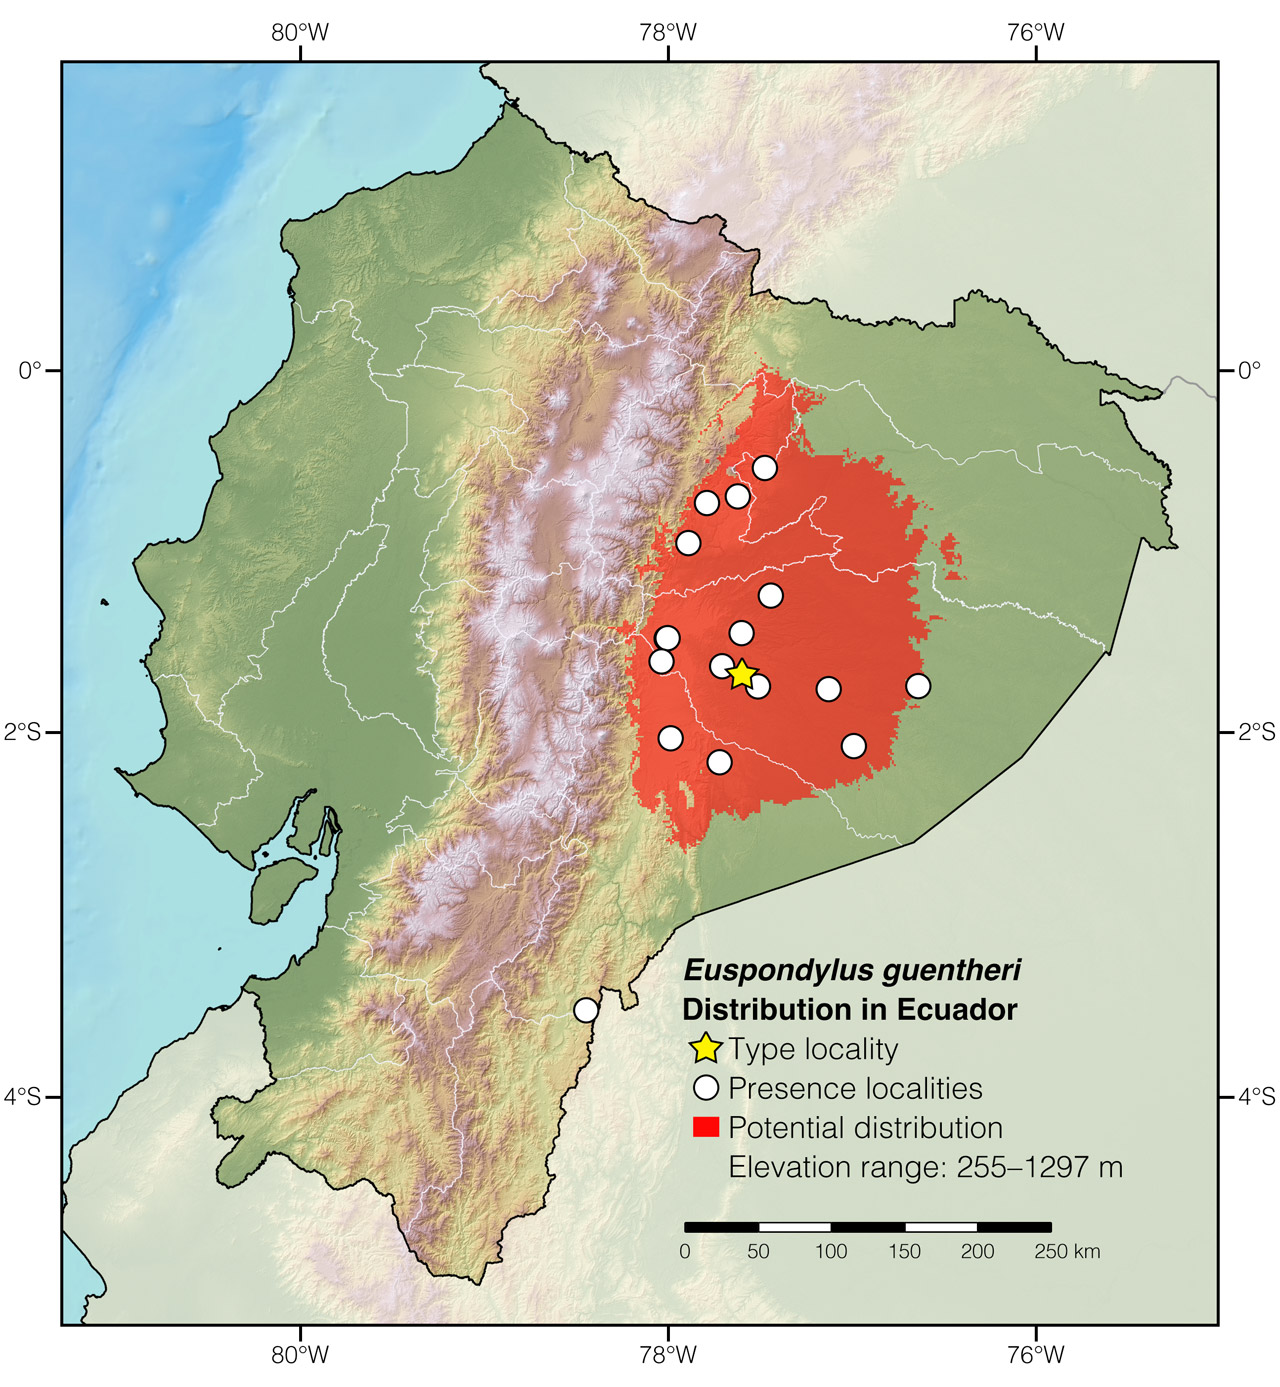 Distribution of Euspondylus guentheri in Ecuador